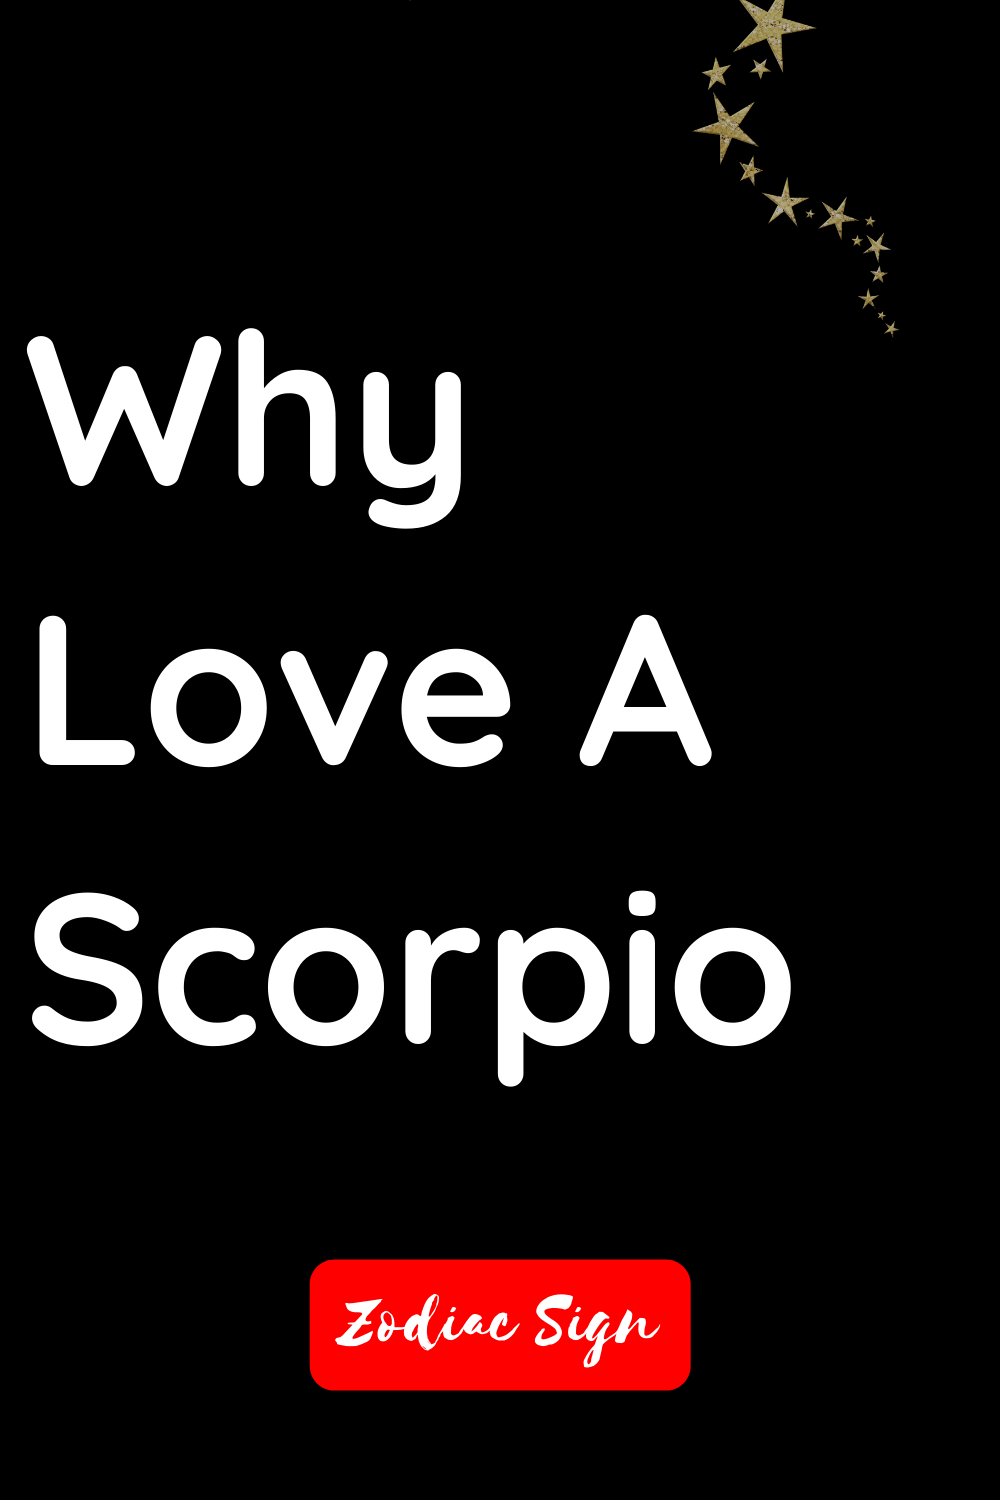 Why love a Scorpio